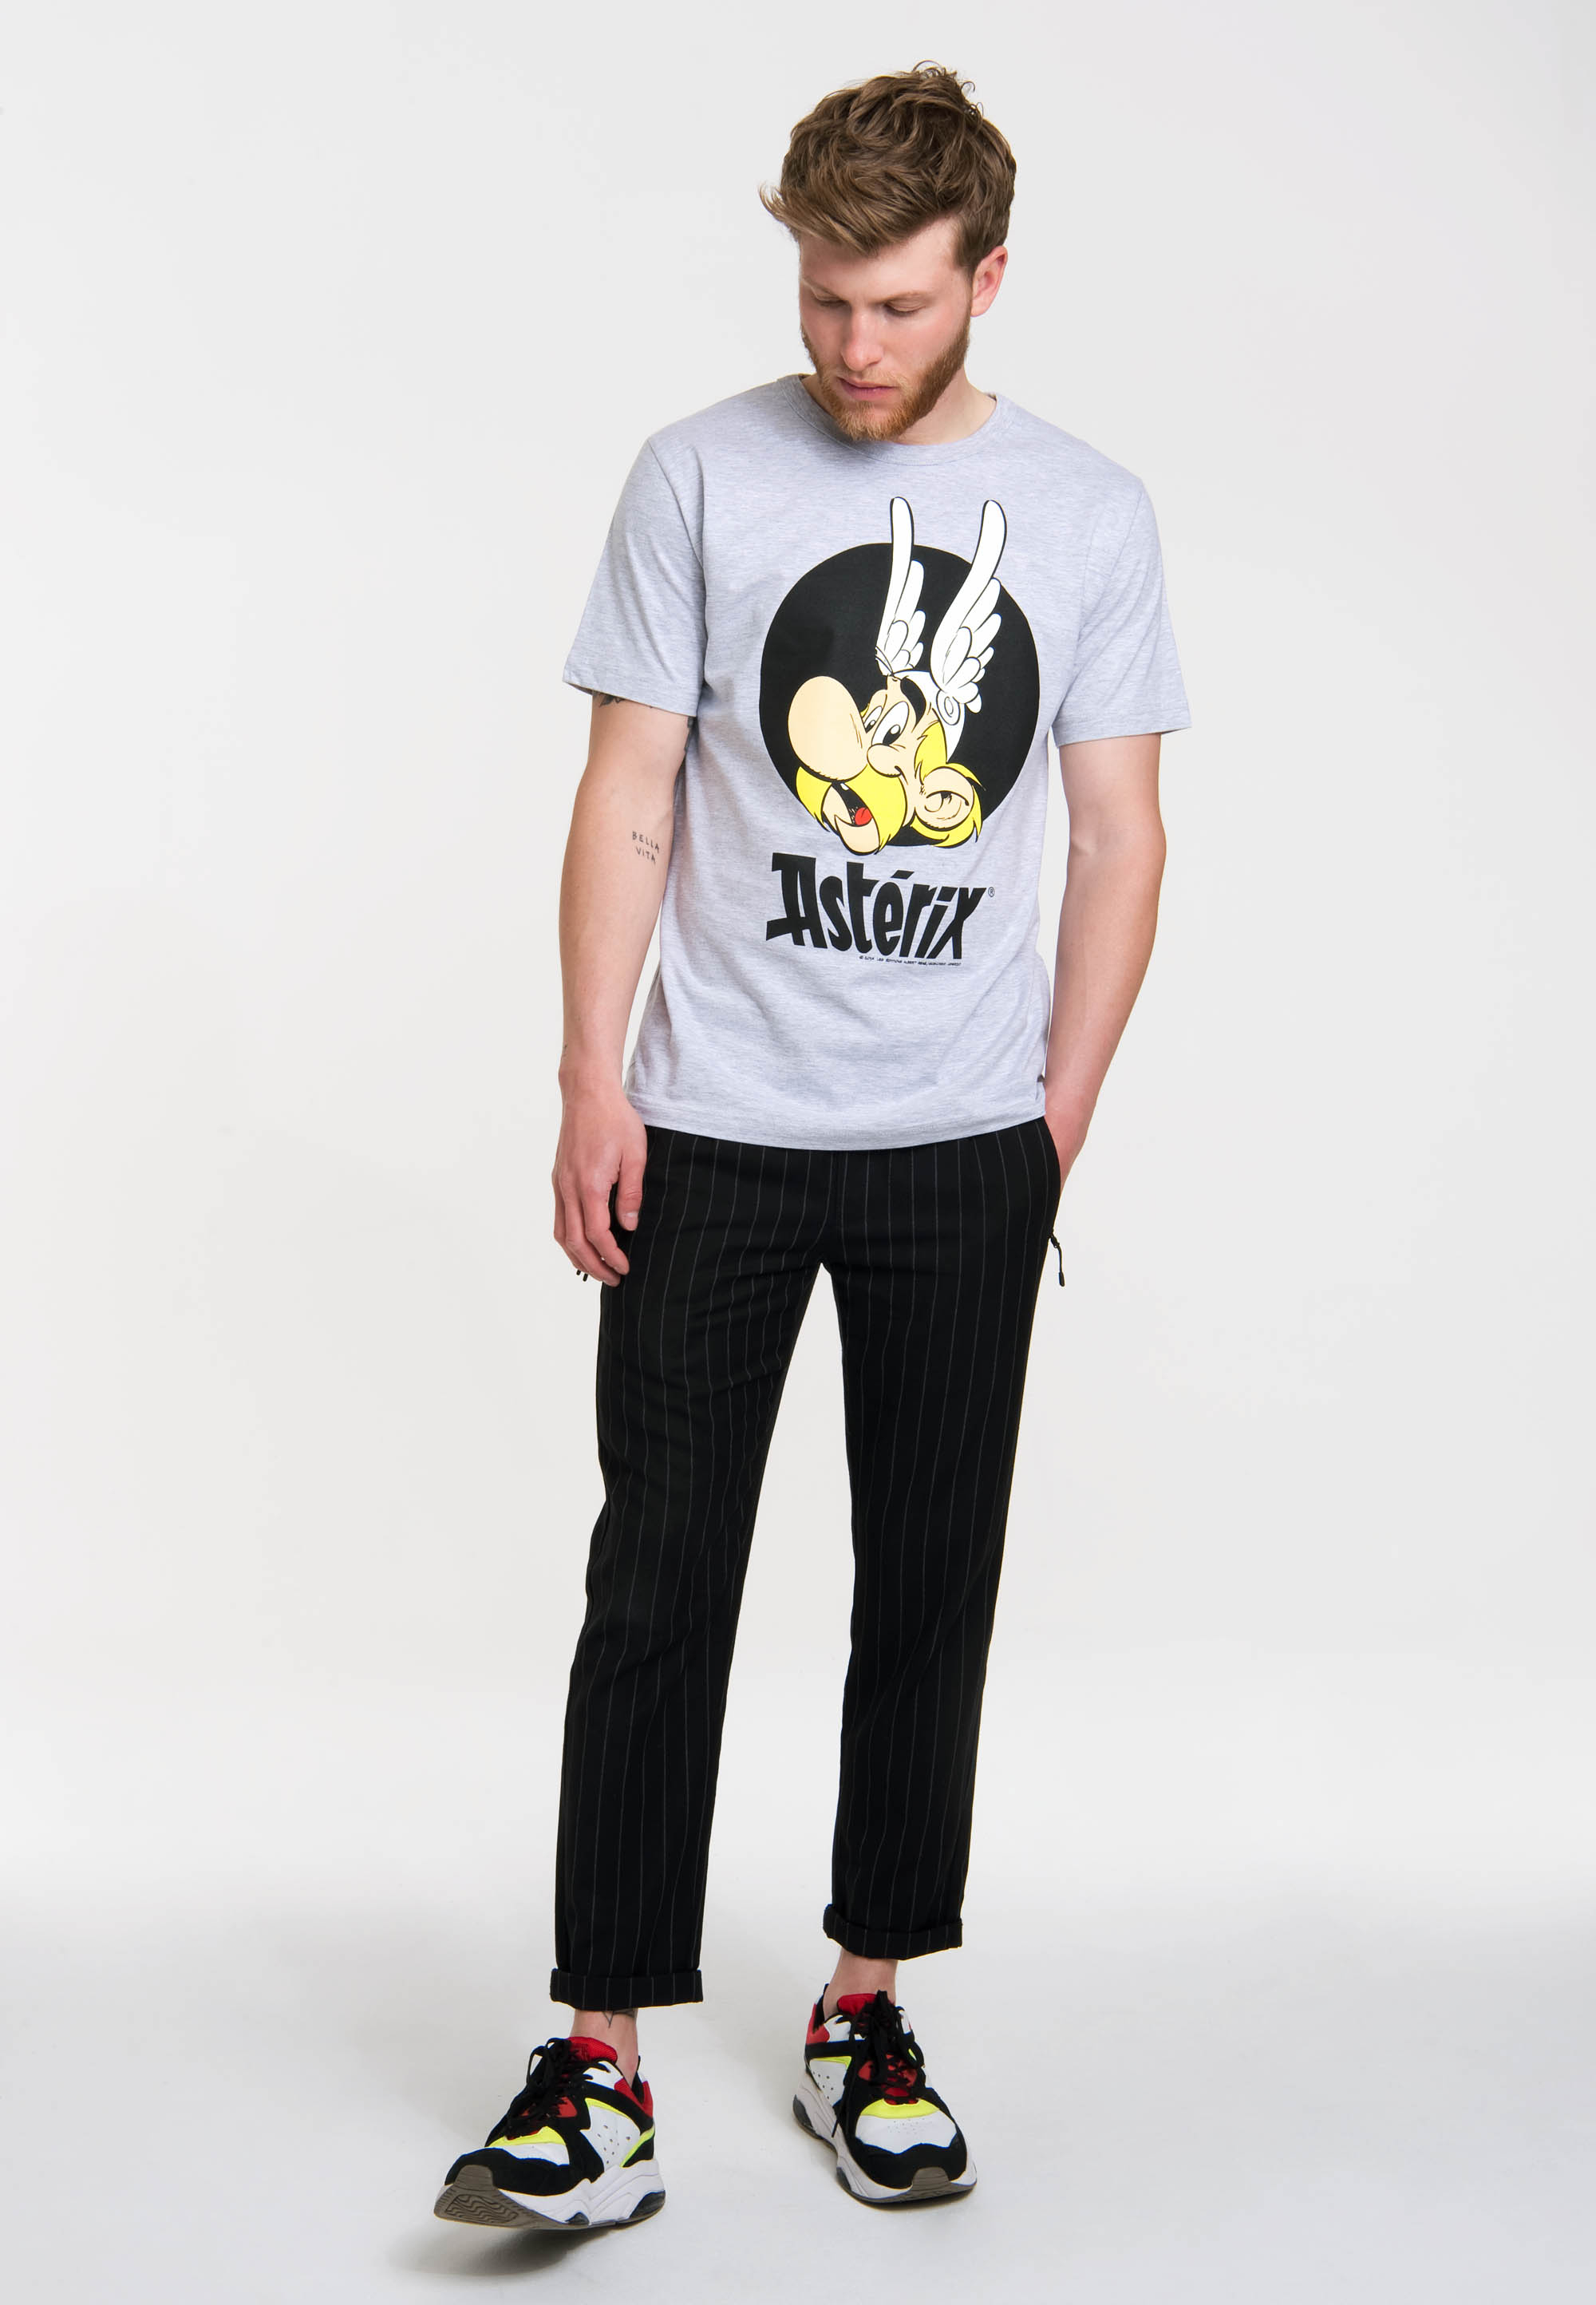 T-shirt 100% cotton Portrait Asterix | eBay Logoshirt® Gray) (Heather